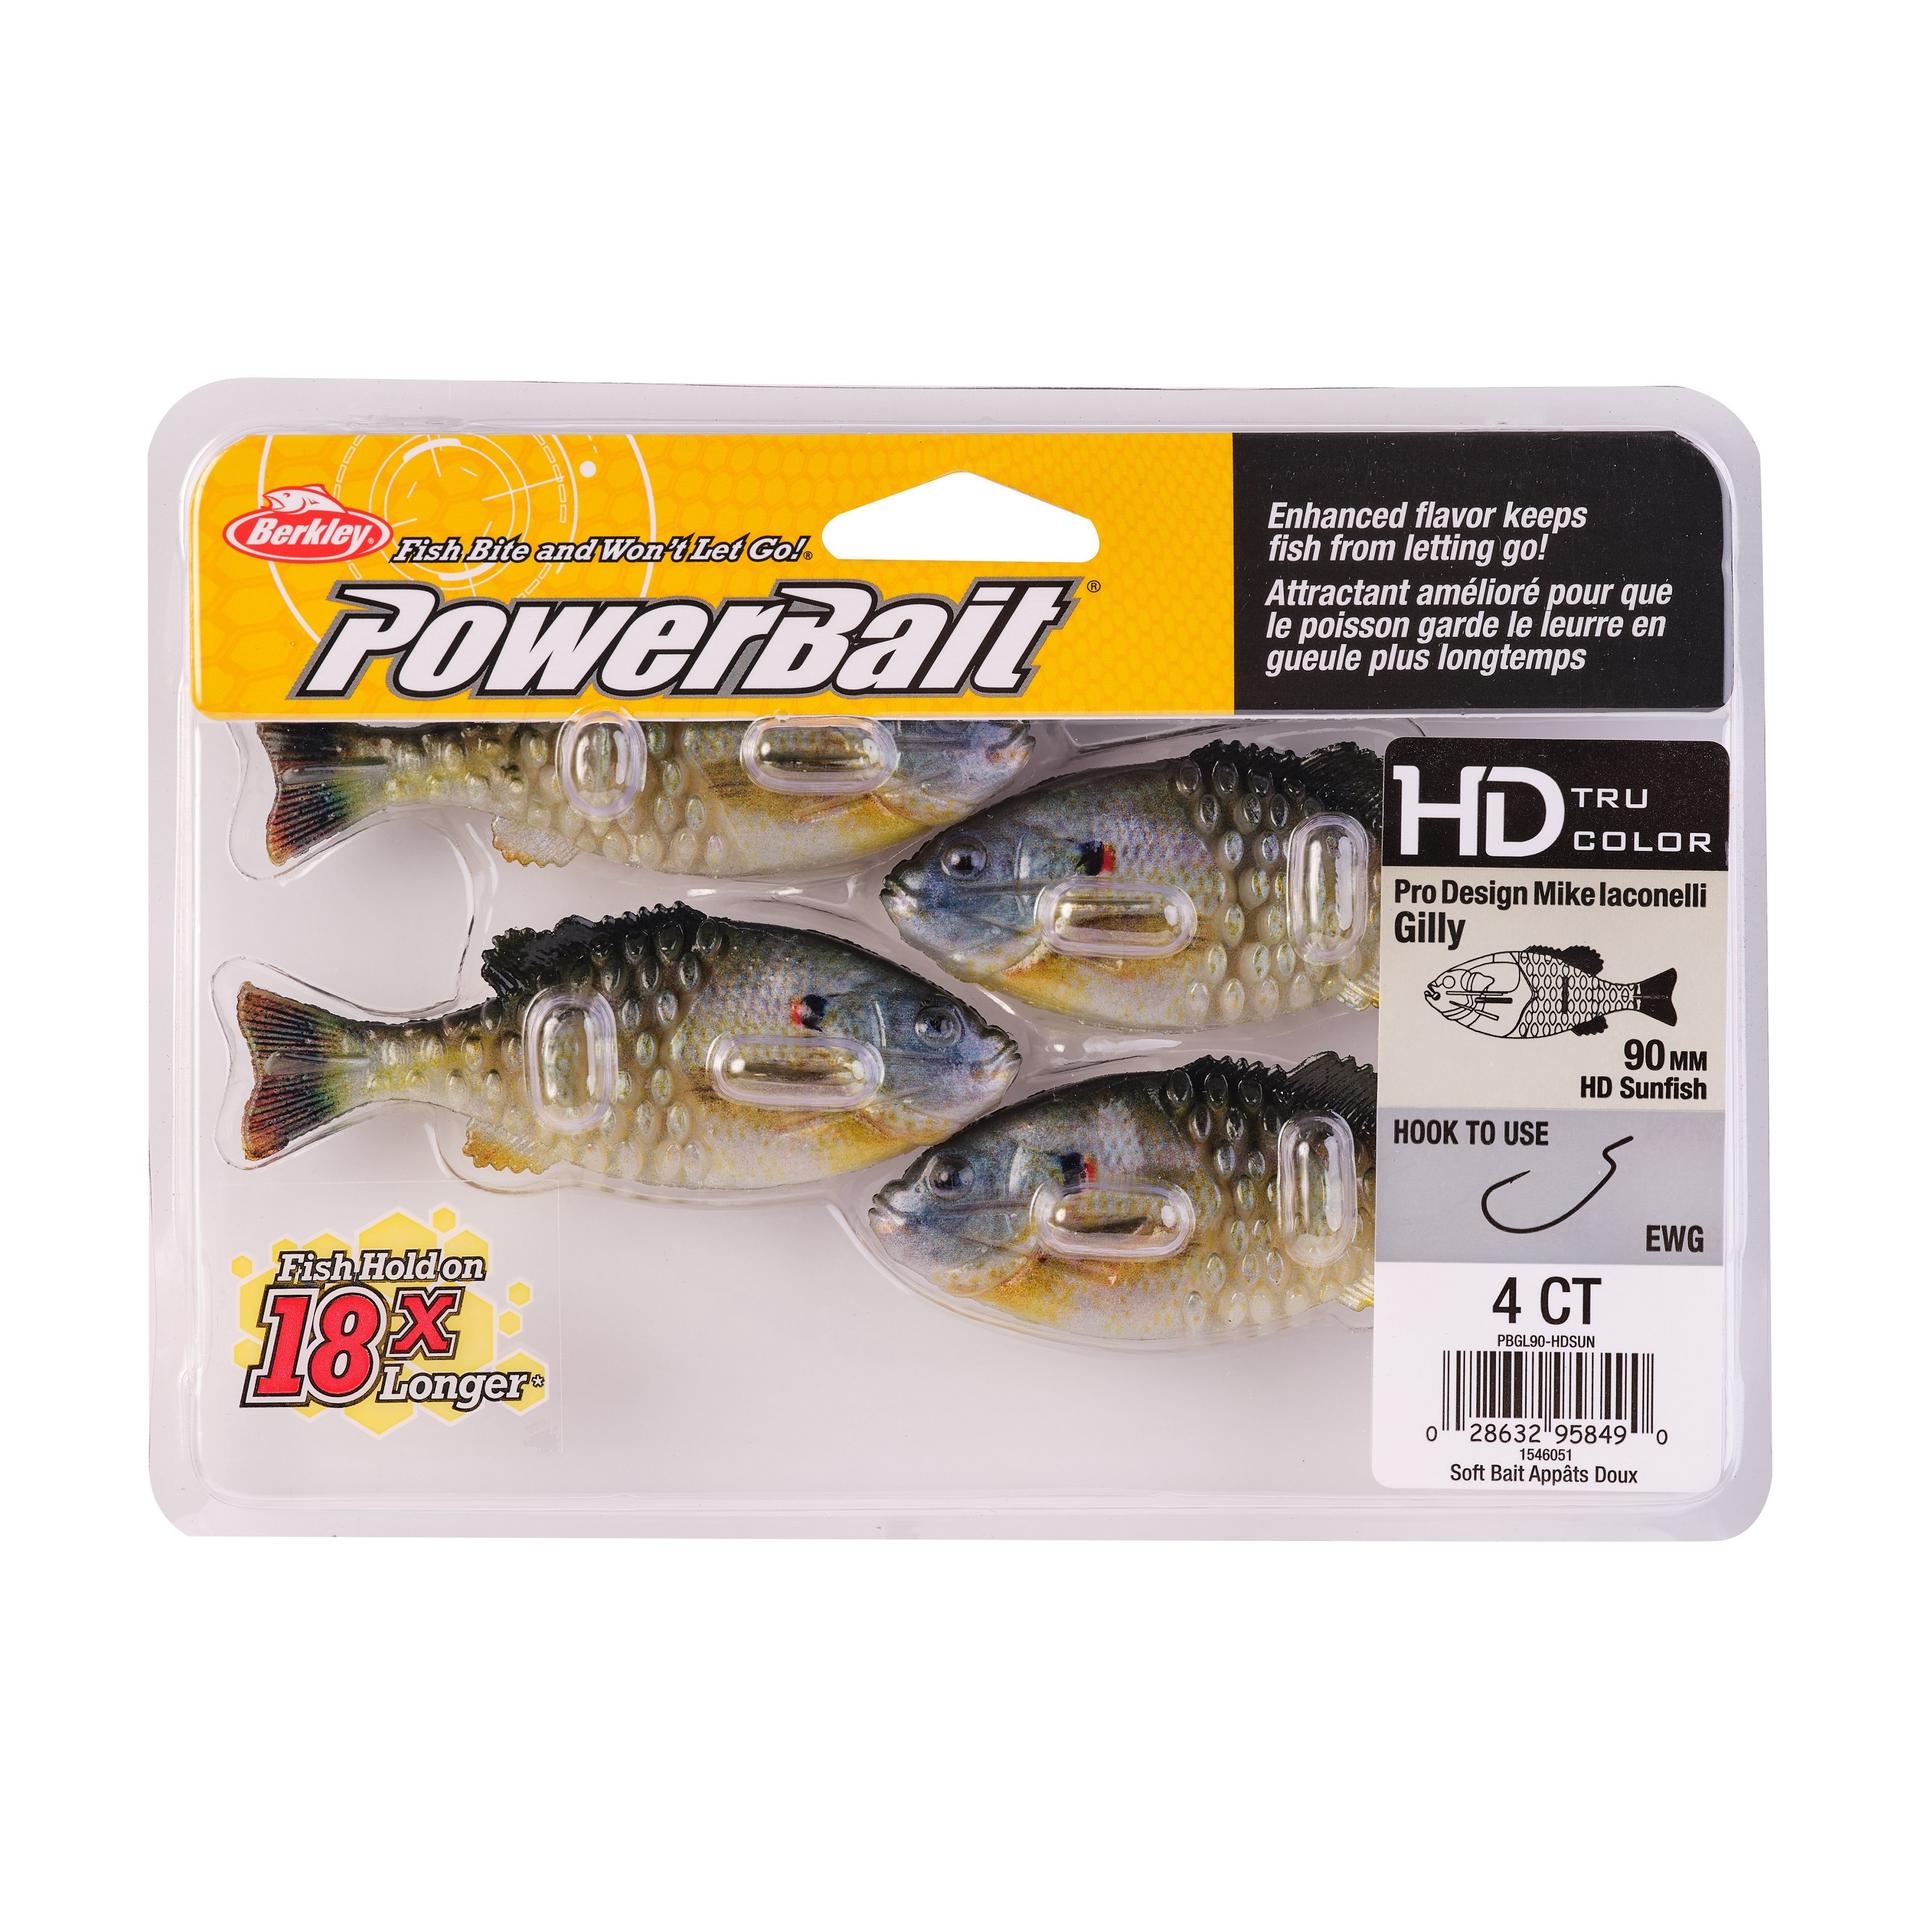 PowerBaitGilly HDSunfish 90mm PKG | Berkley Fishing